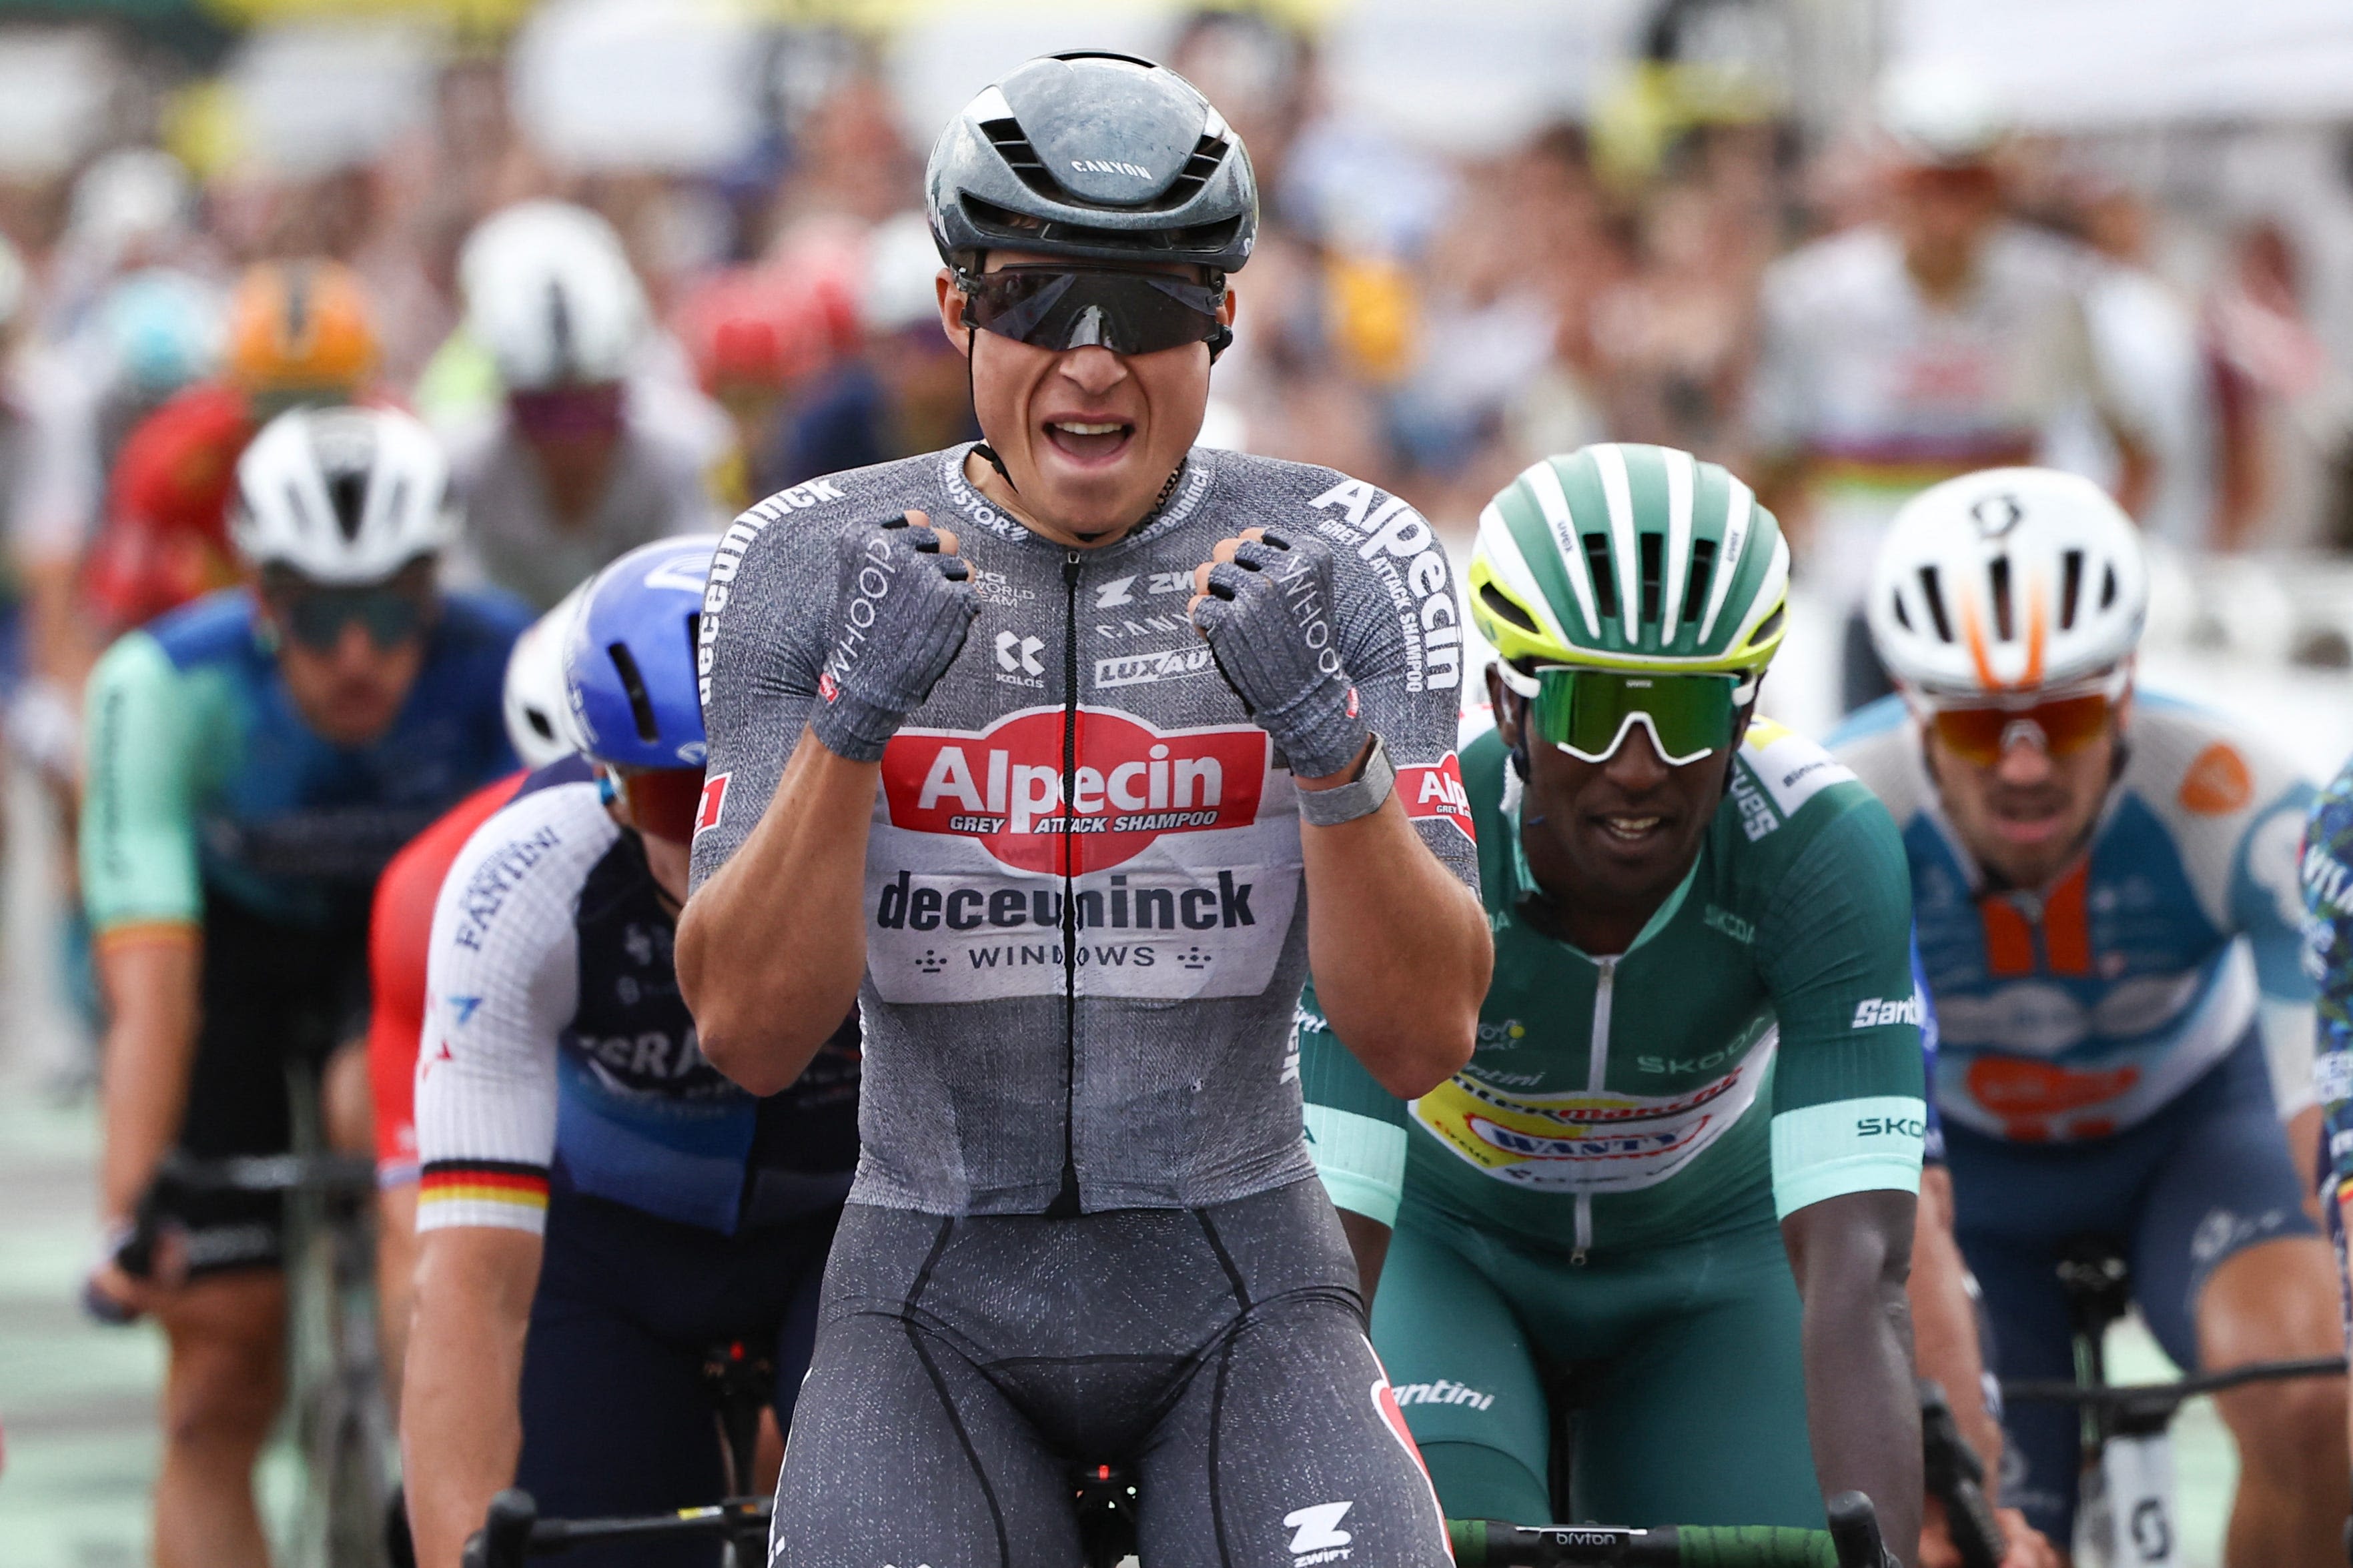 Tour de France standings, results: Belgium's Jasper Philipsen prevails in Stage 10